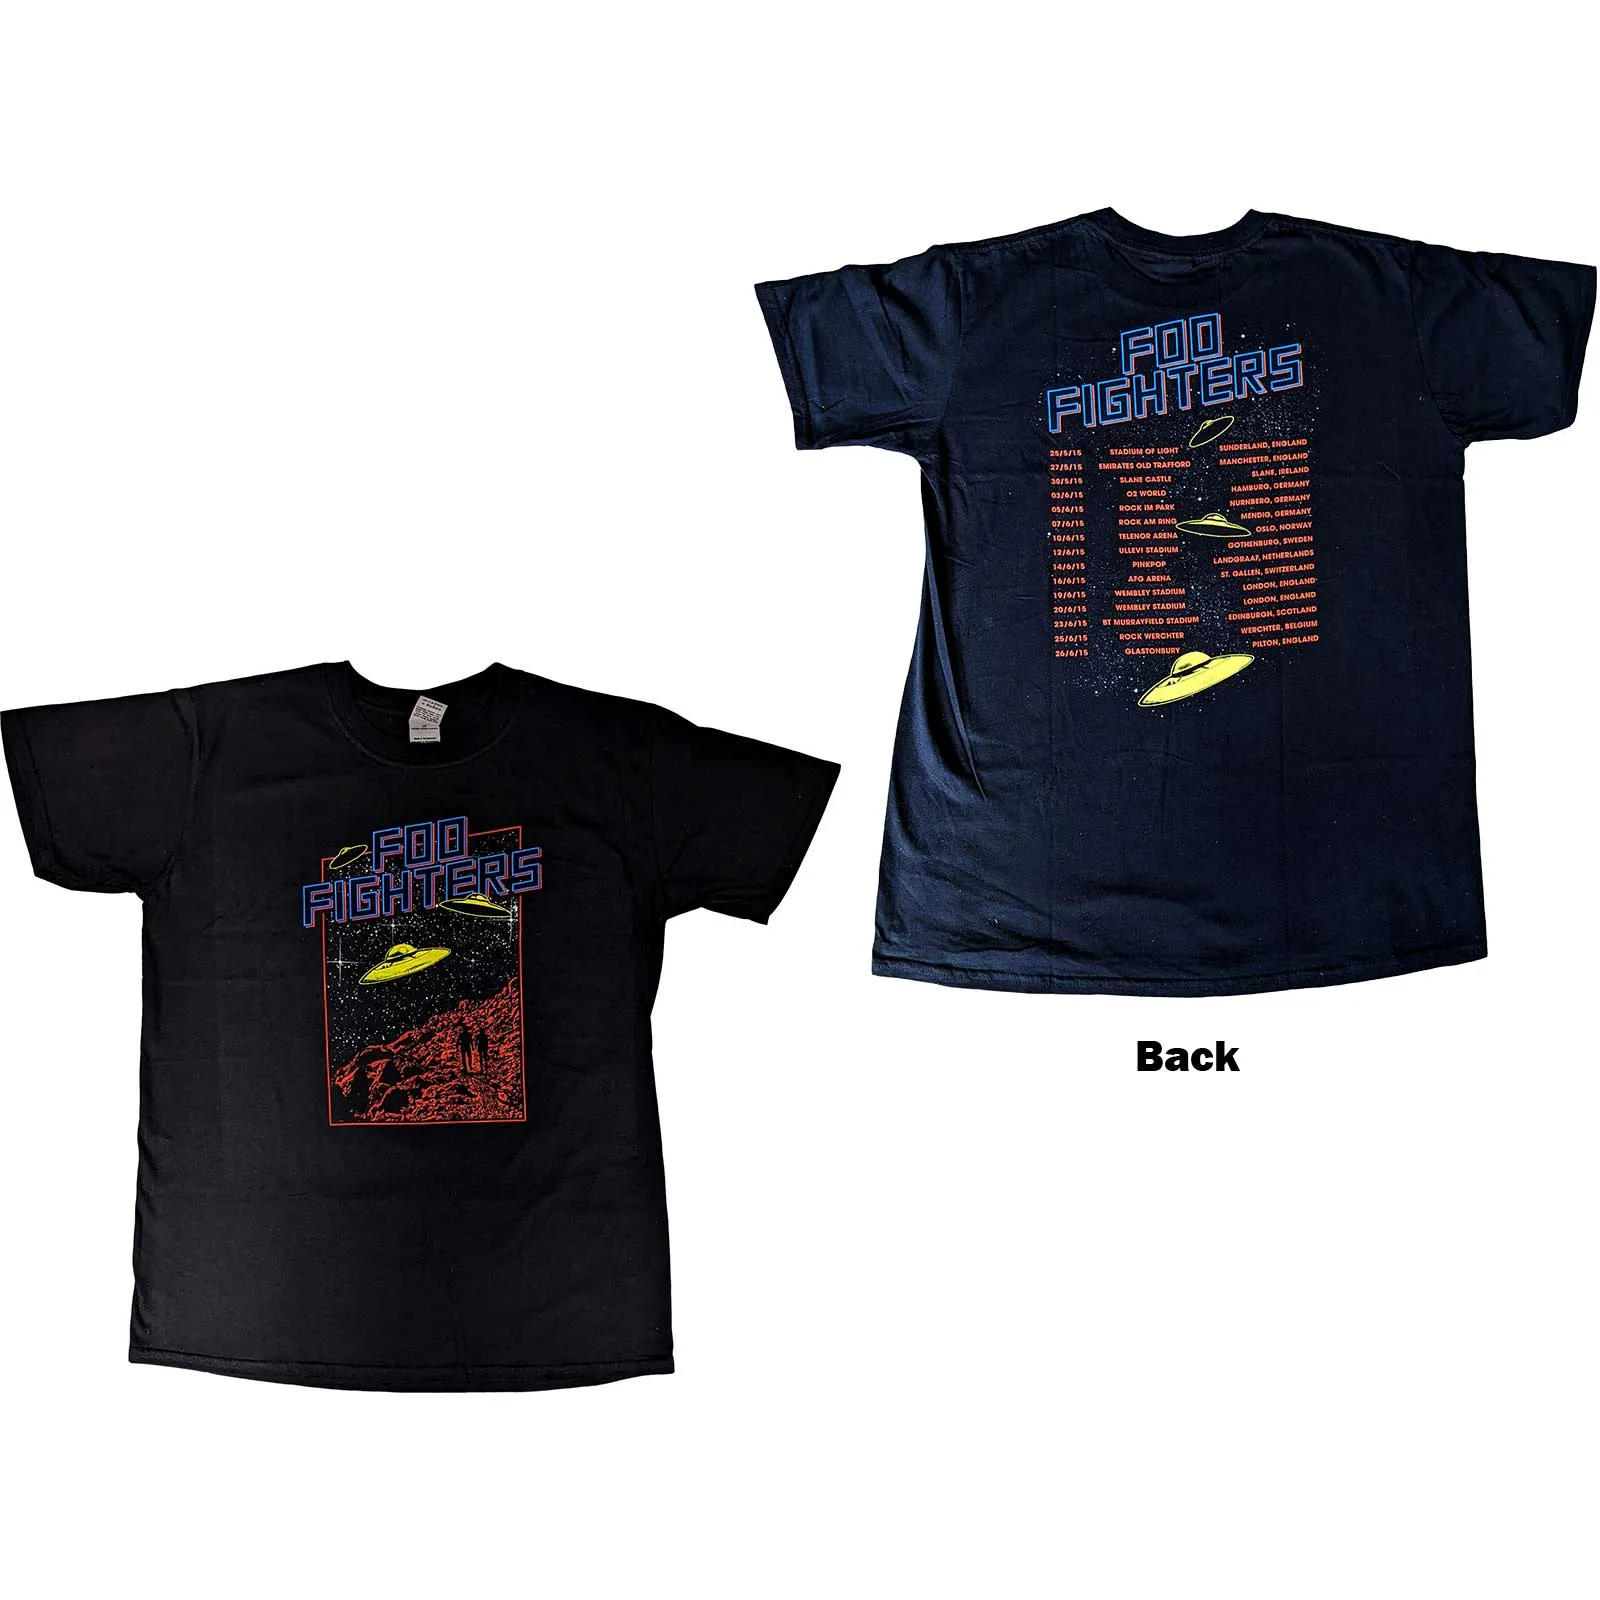 Foo Fighters - Unisex T-Shirt UFOS 2015 European Tour Back Print artwork